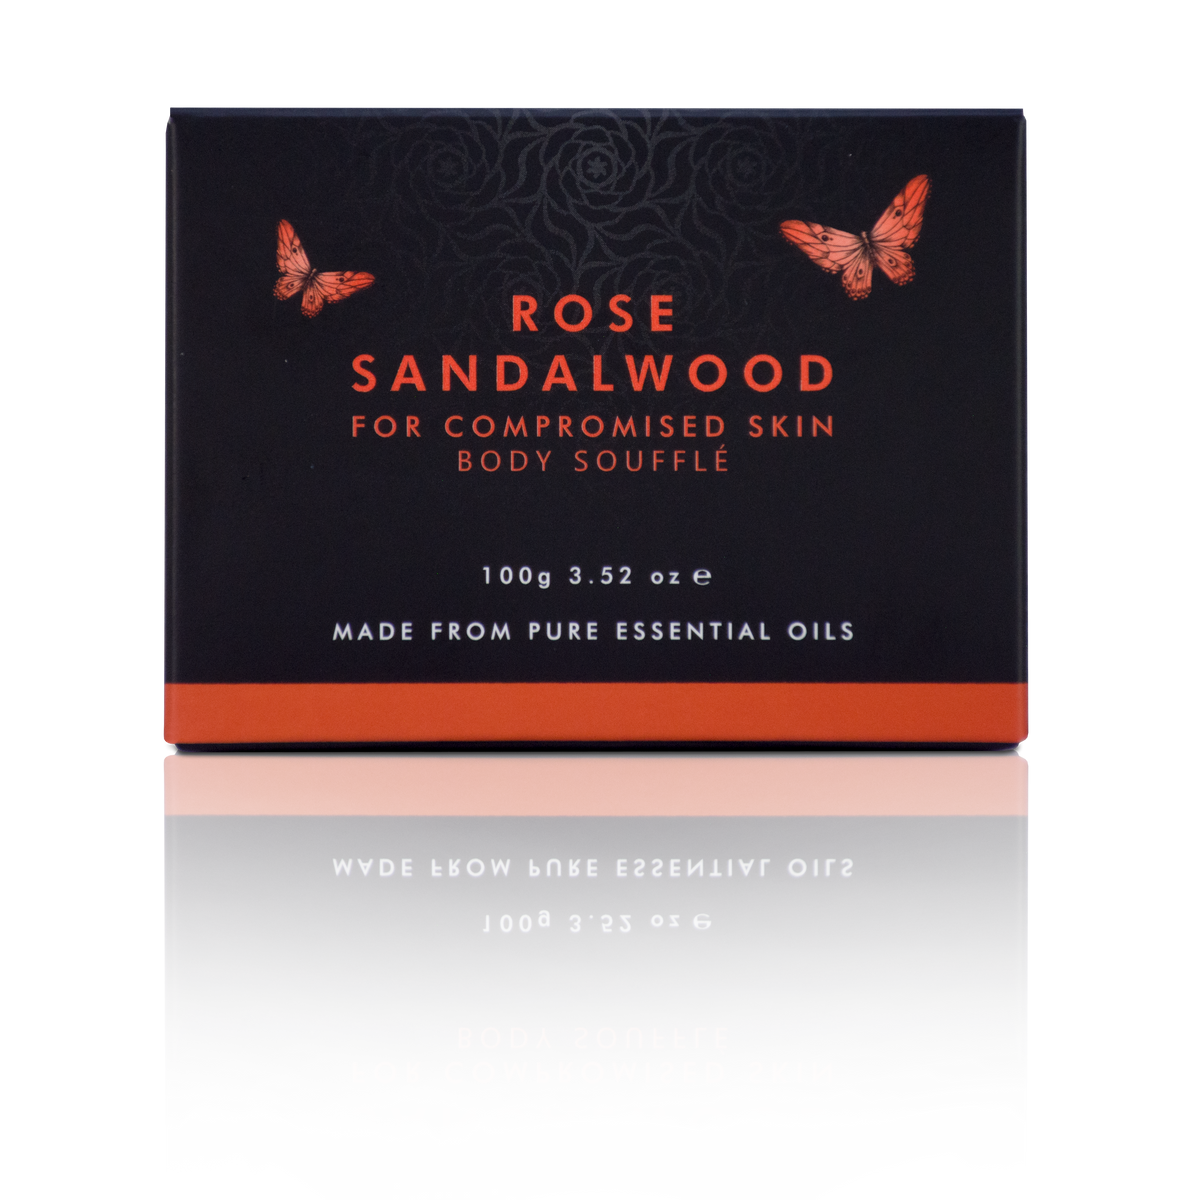 Body Souffle Compromised Skin Rose Sandalwood